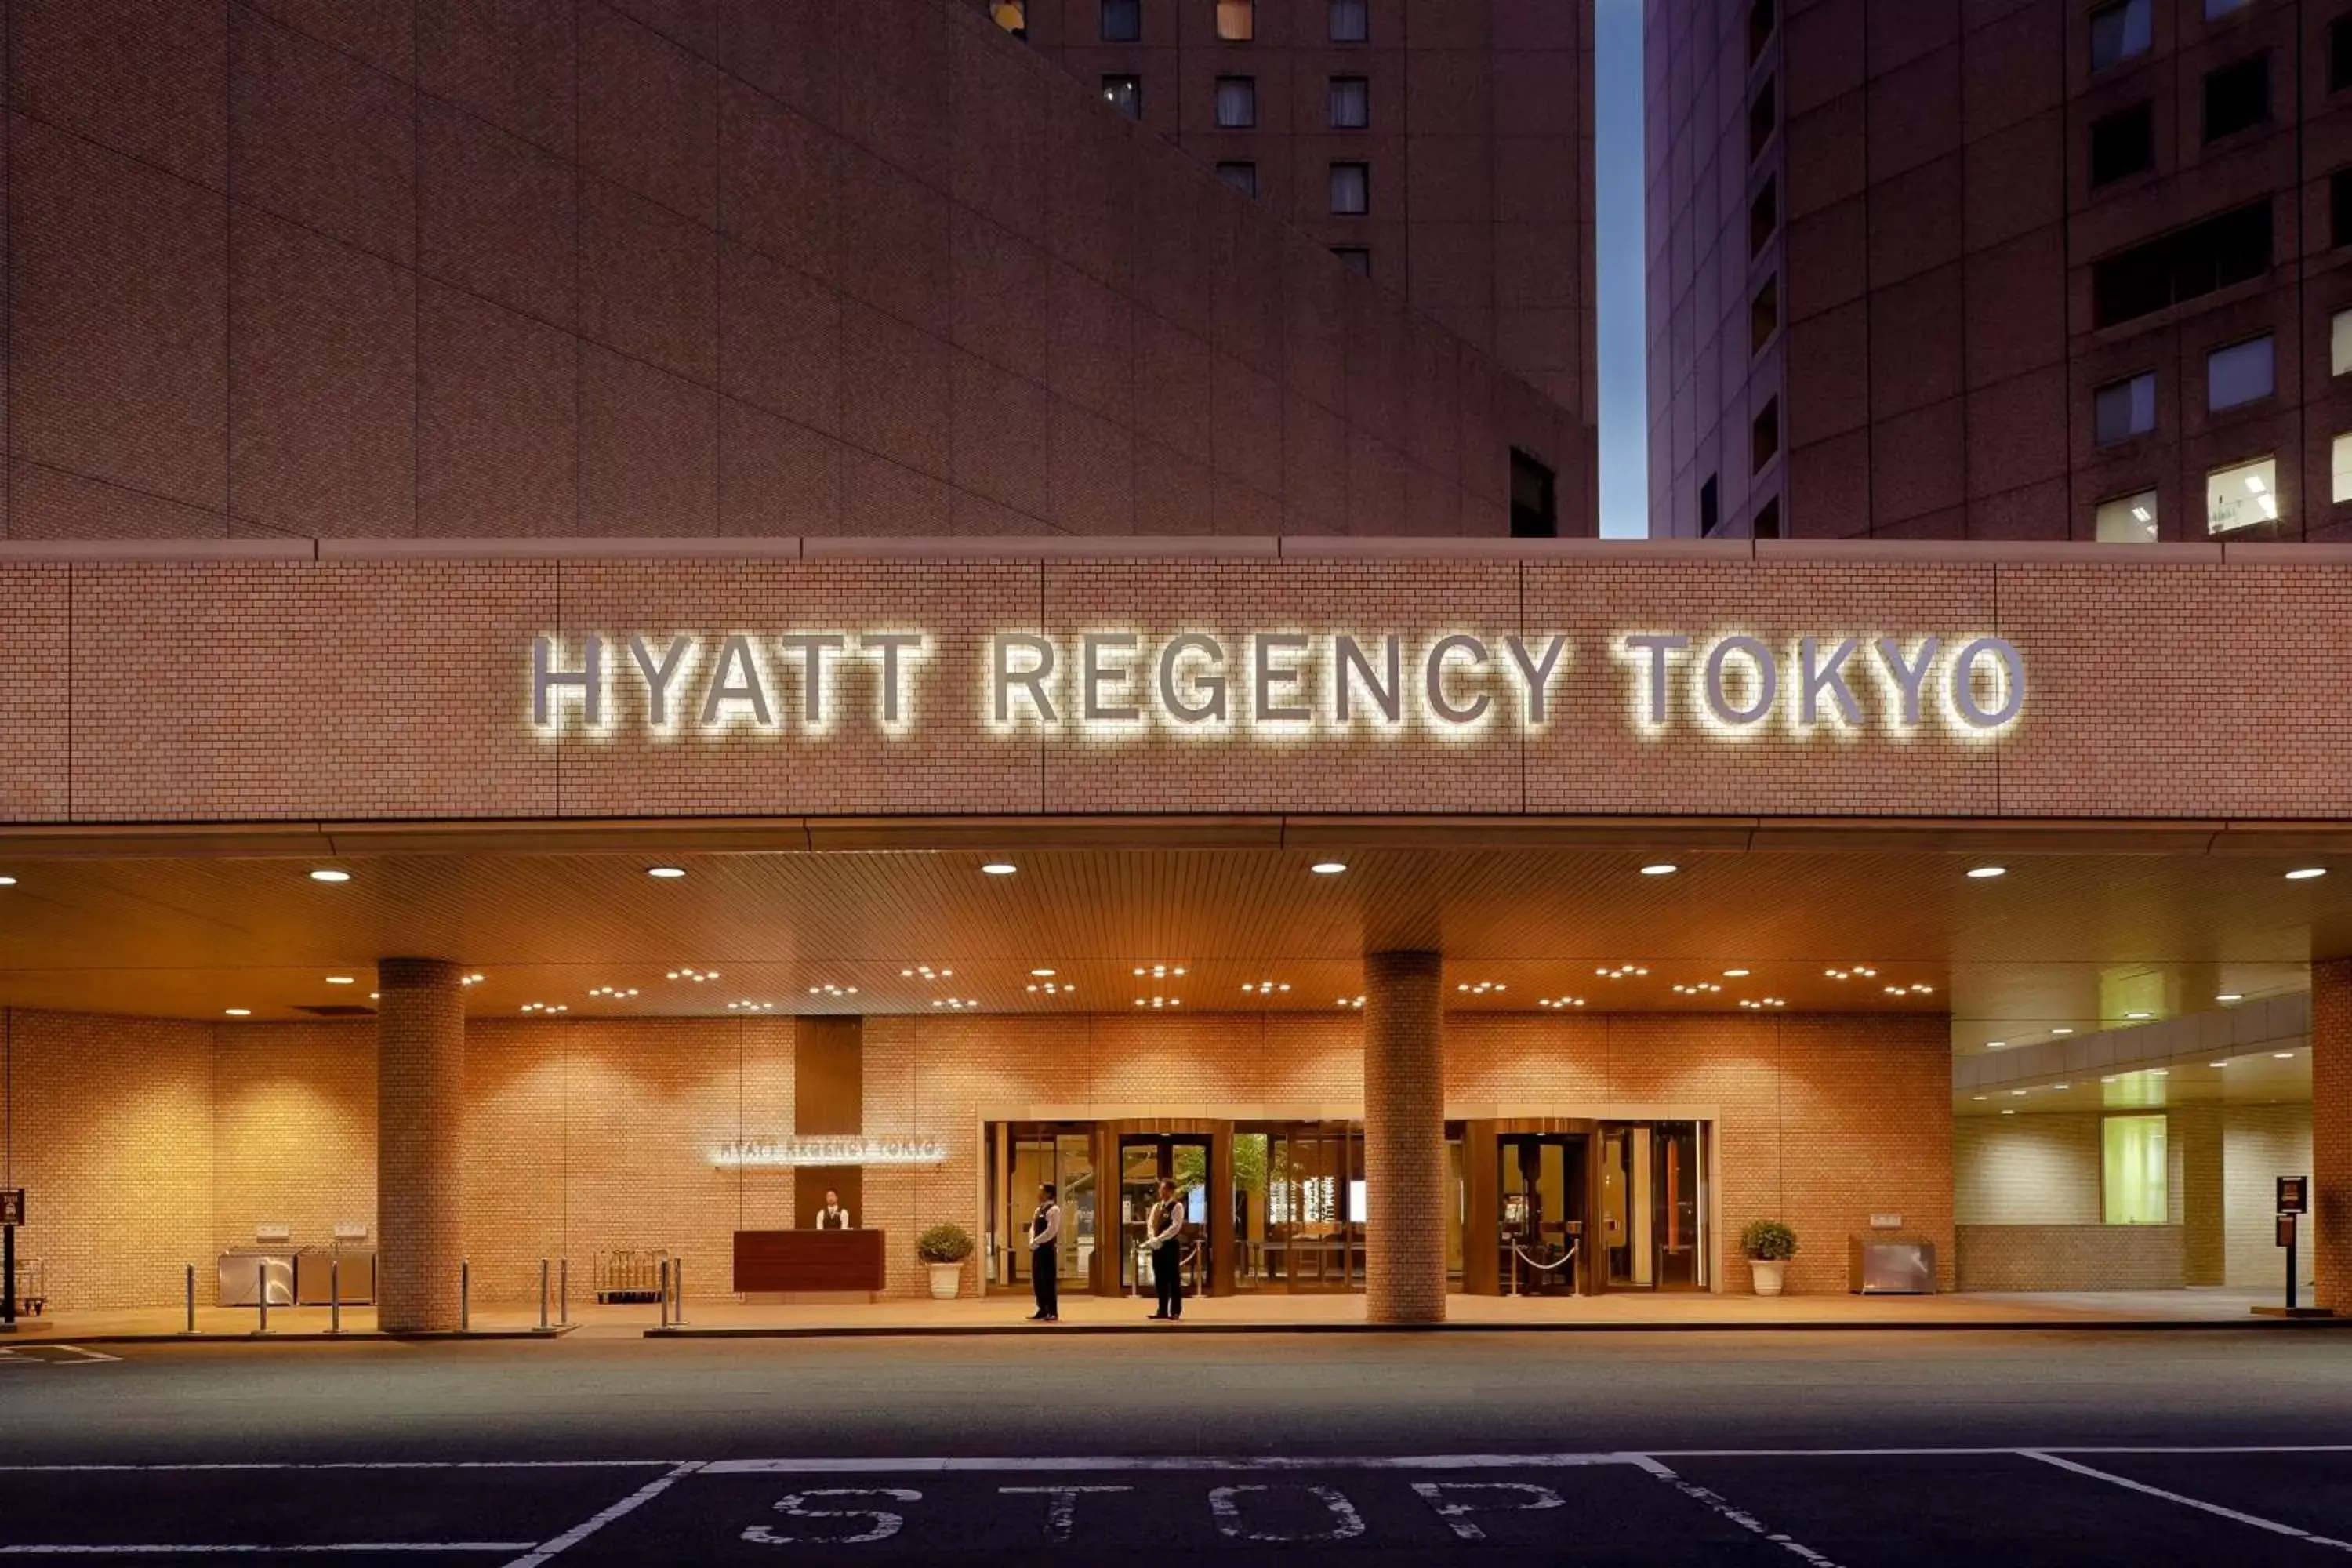 Property building in Hyatt Regency Tokyo